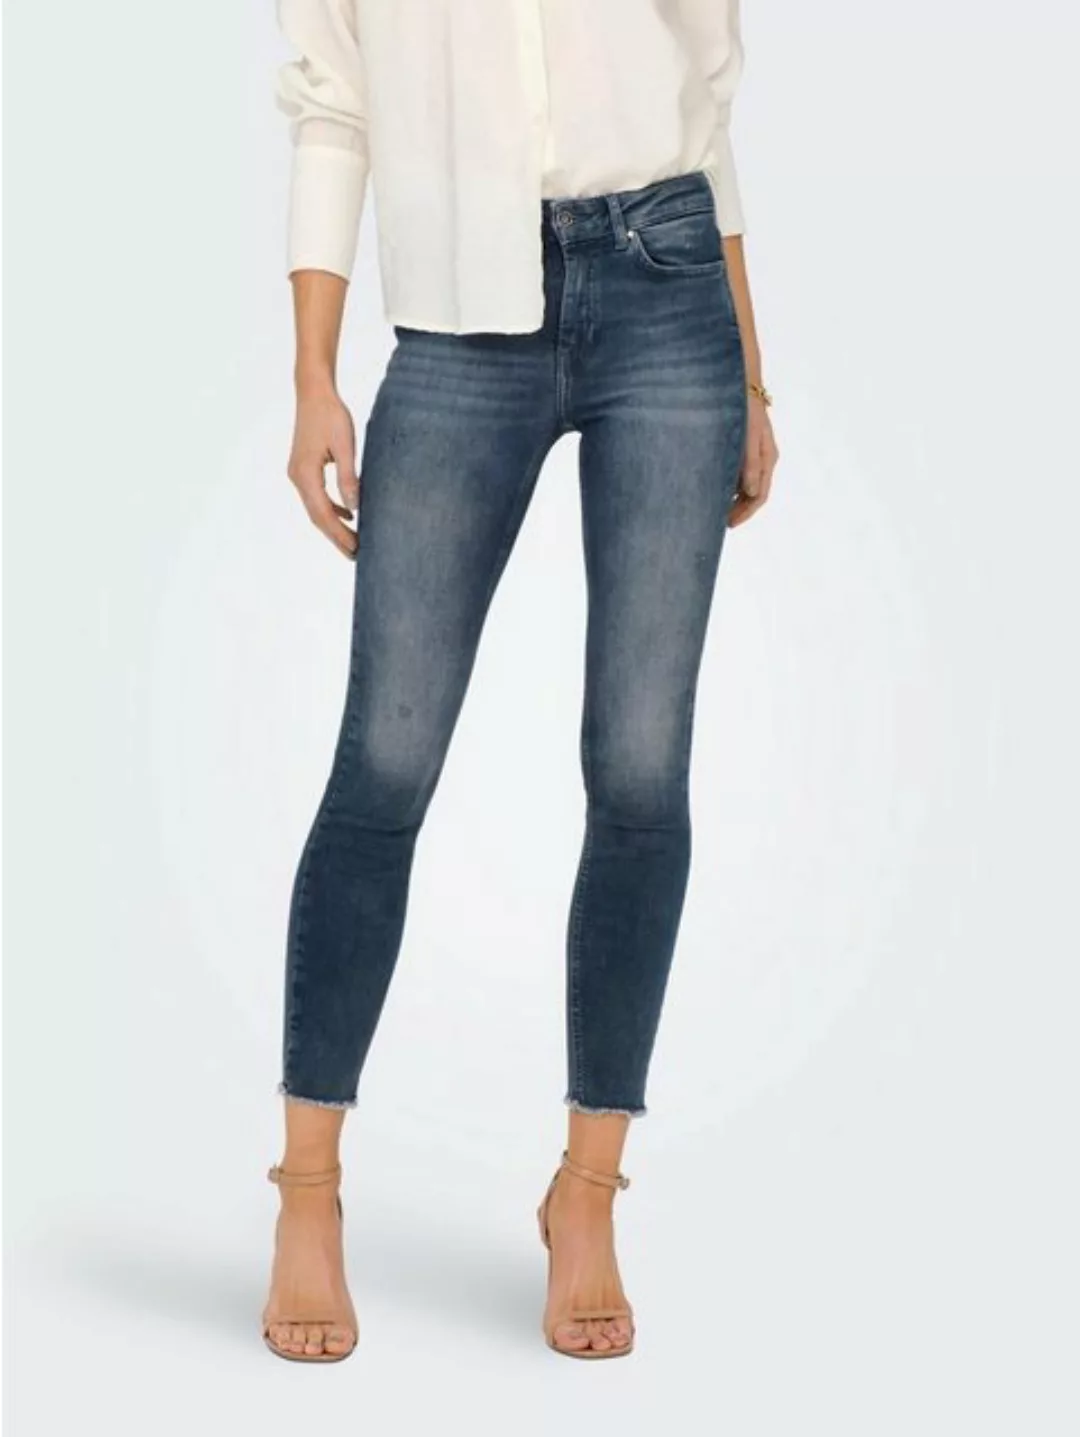 Only Damen Jeans ONLBLUSH LIFE MID SK ANK RW REA422 - Skinny Fit - Blau -Sp günstig online kaufen